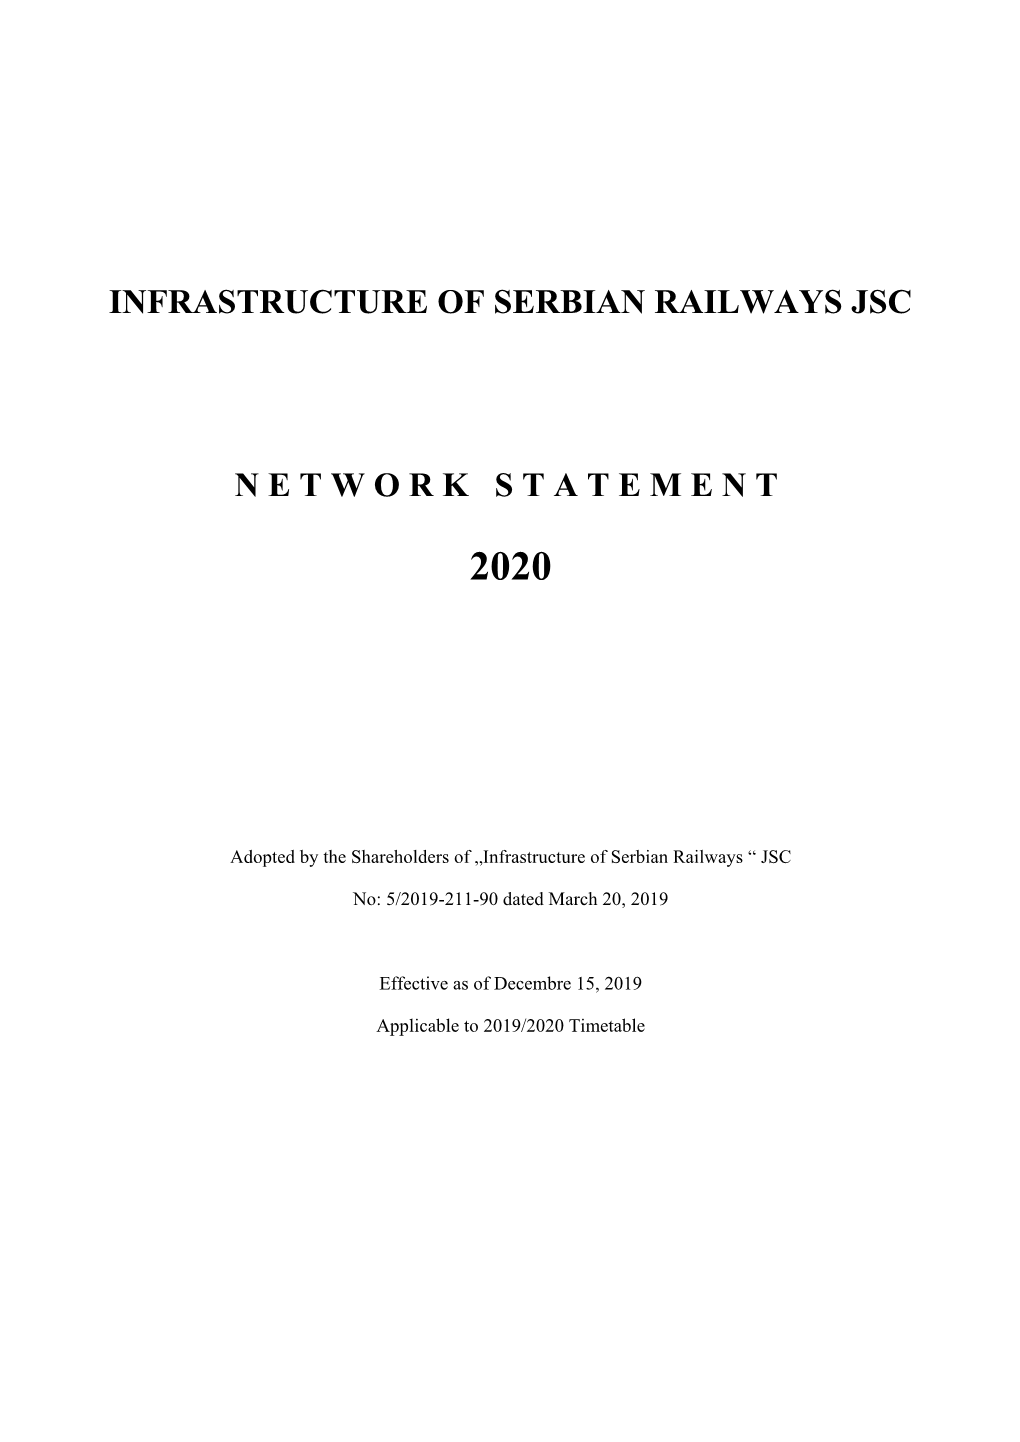 Infrastructure of Serbian Railways Jsc Network